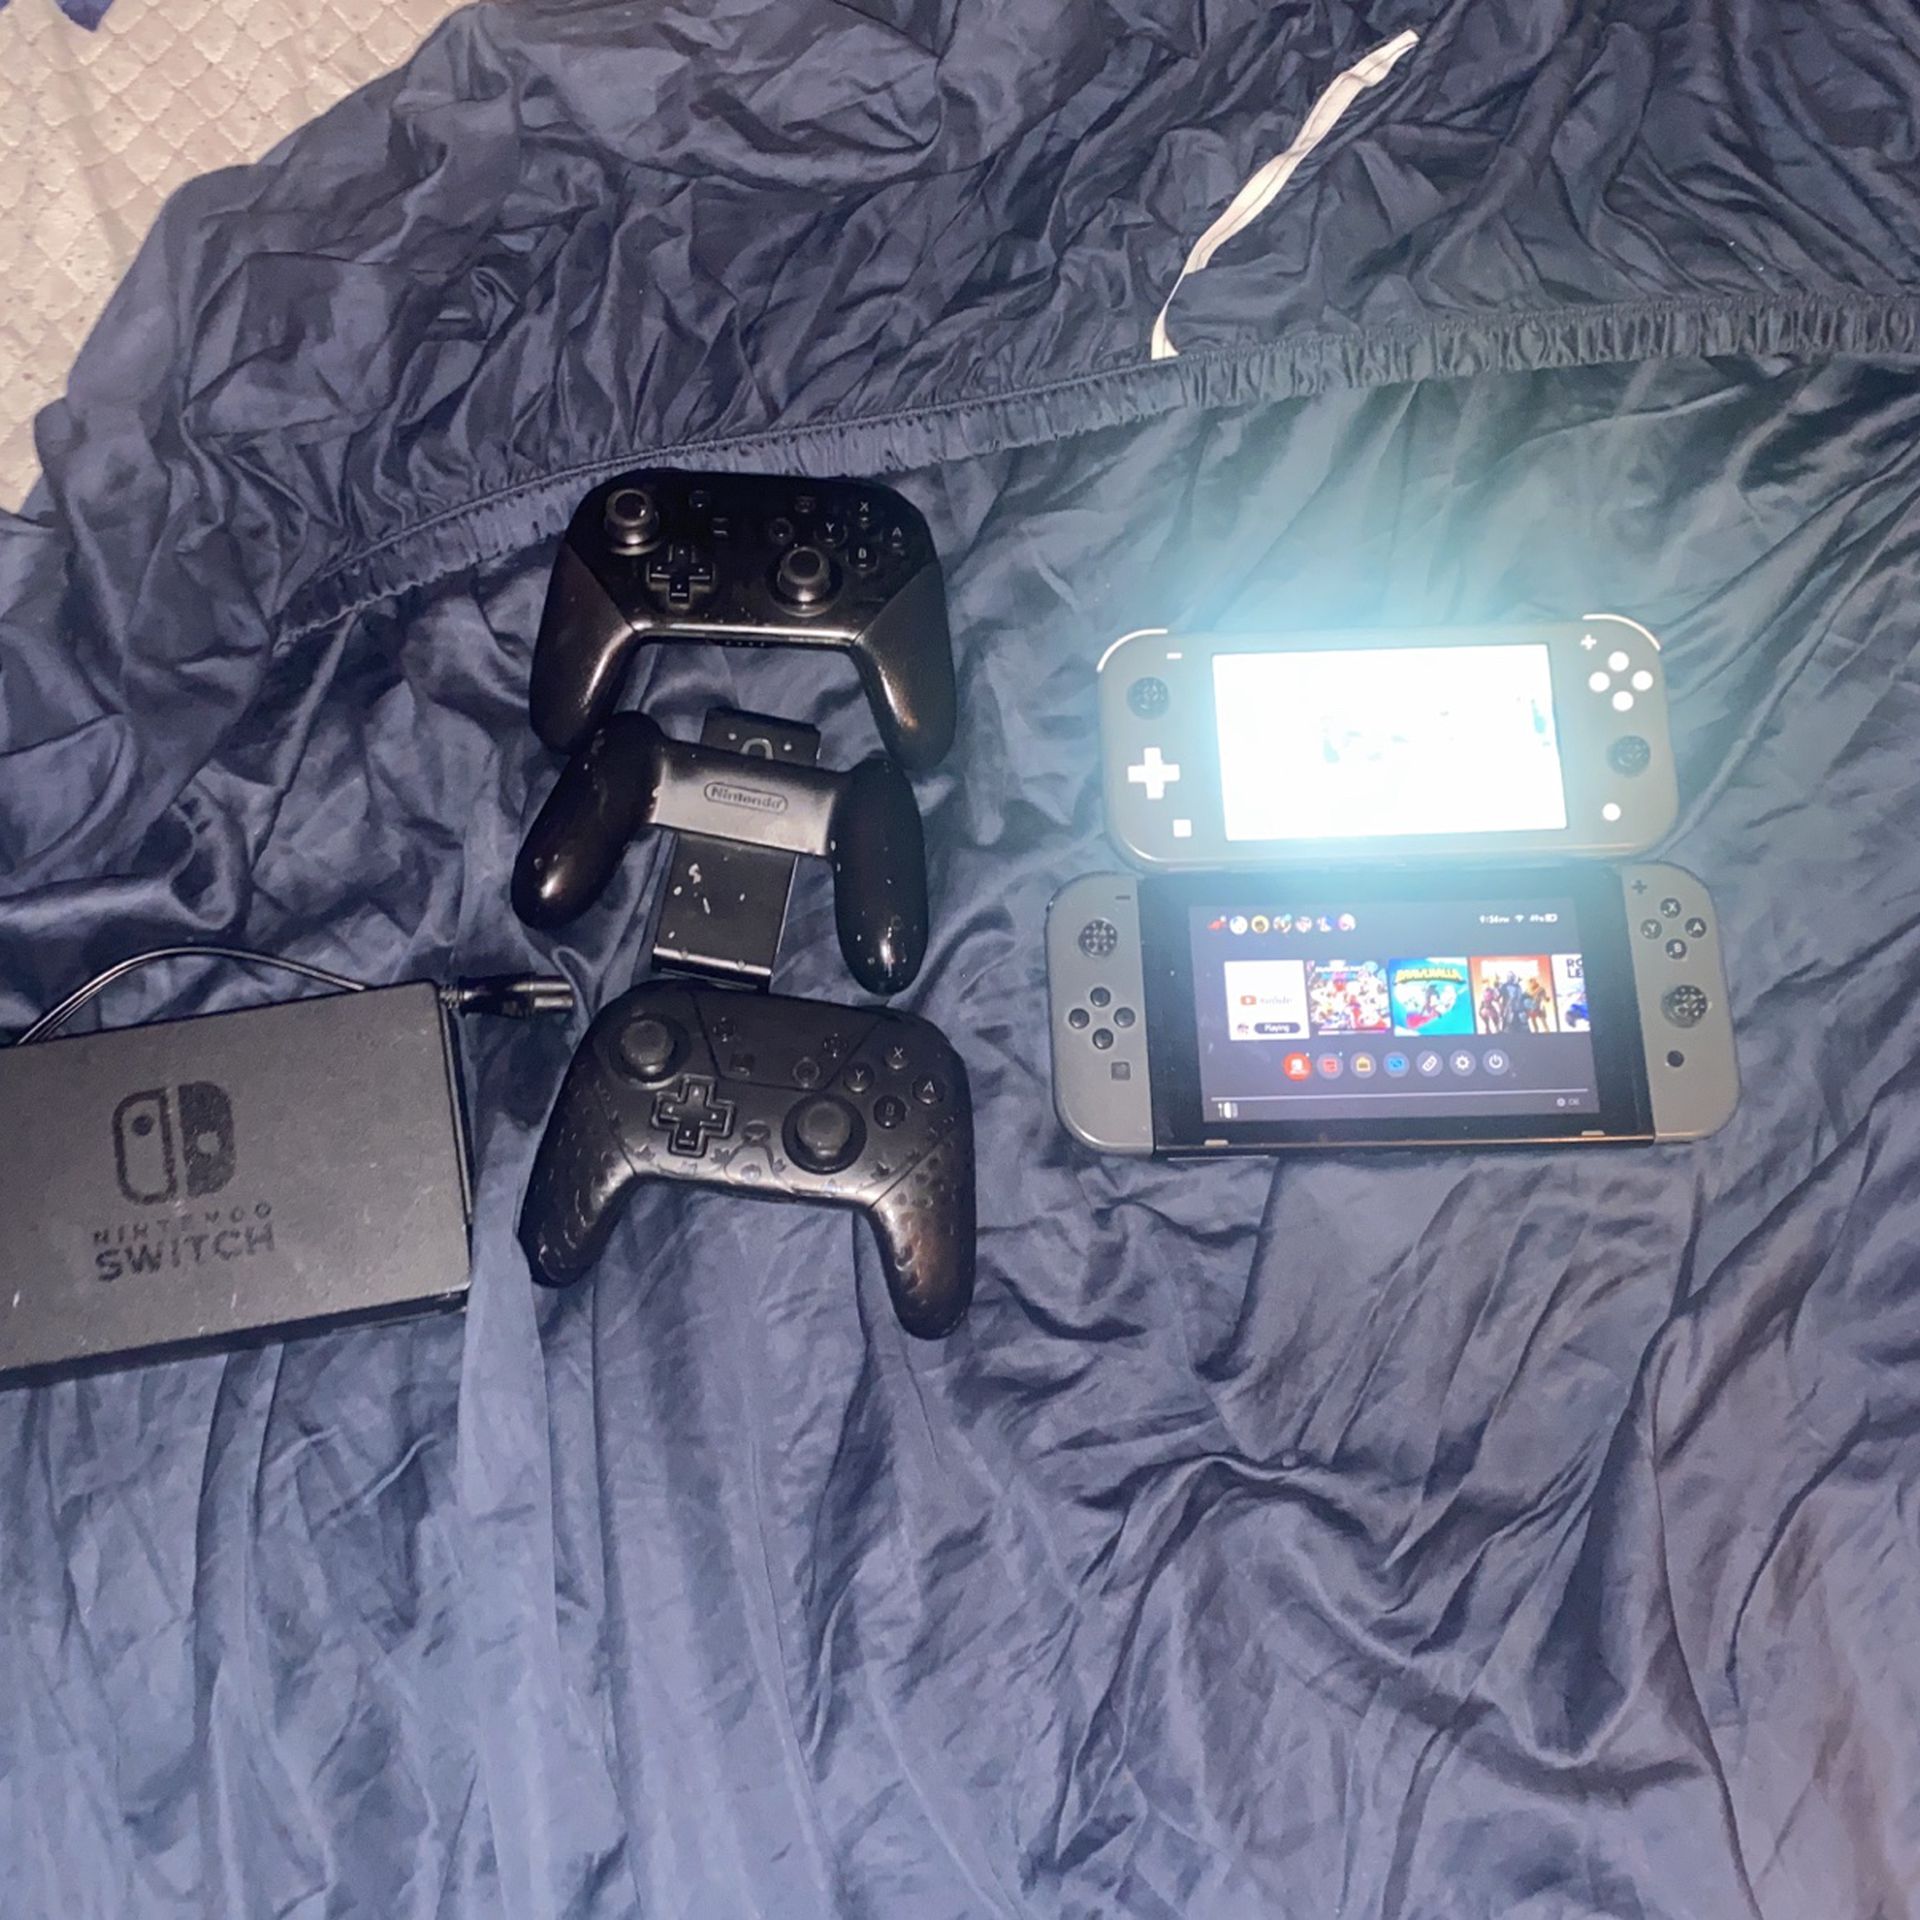 Two Nintendo switches